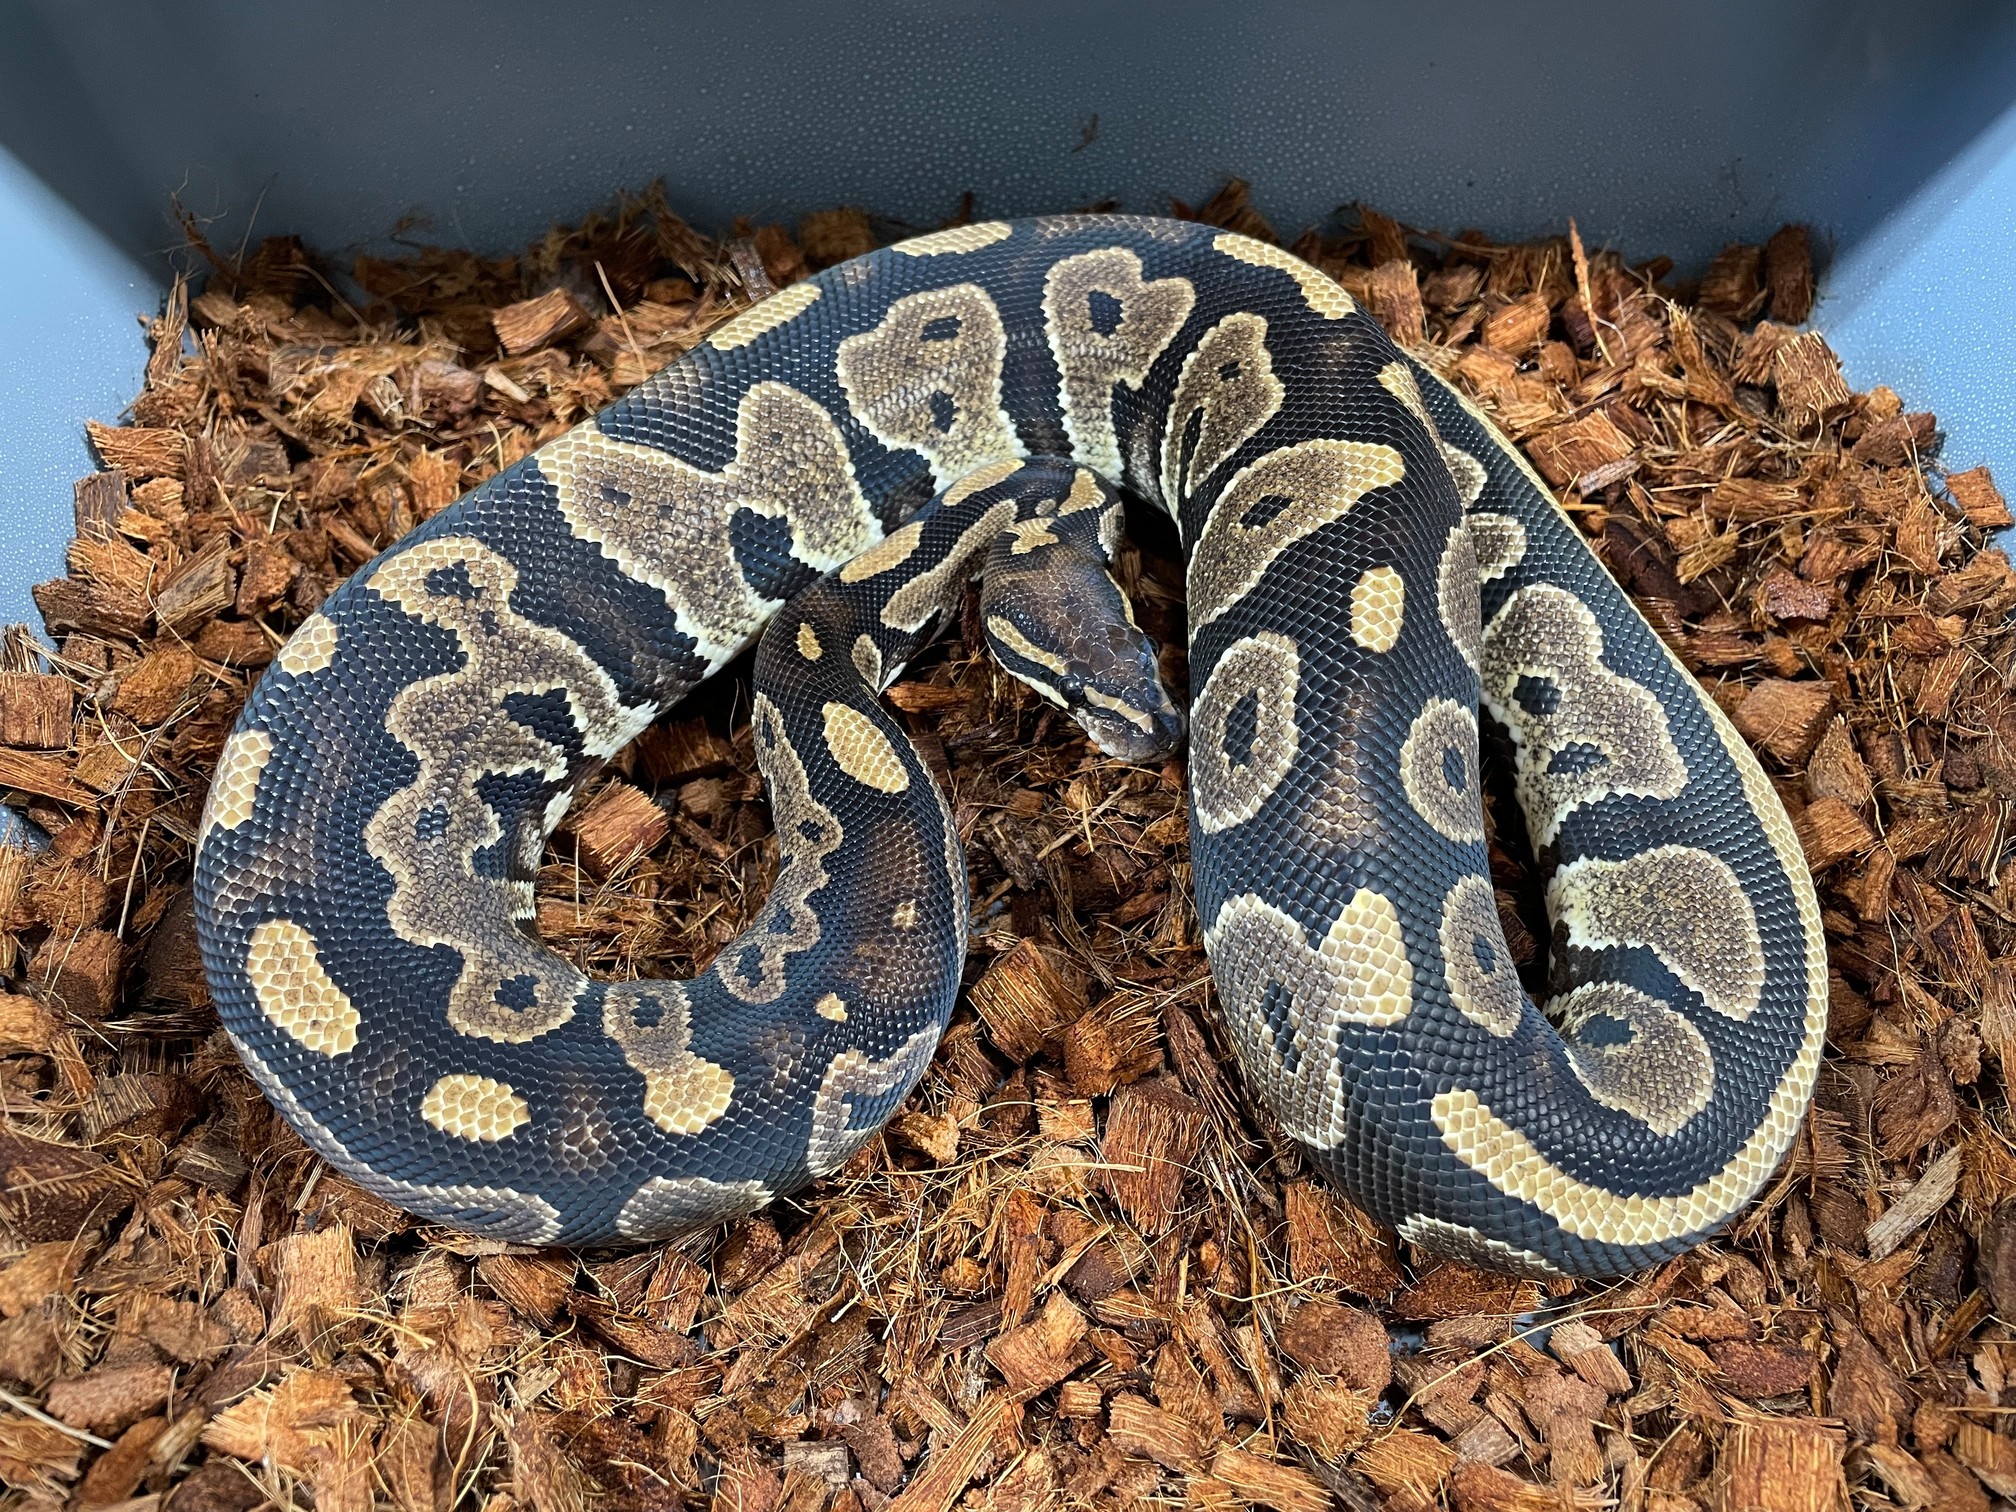 Sapphire Ball Python by TRIGG Reptiles